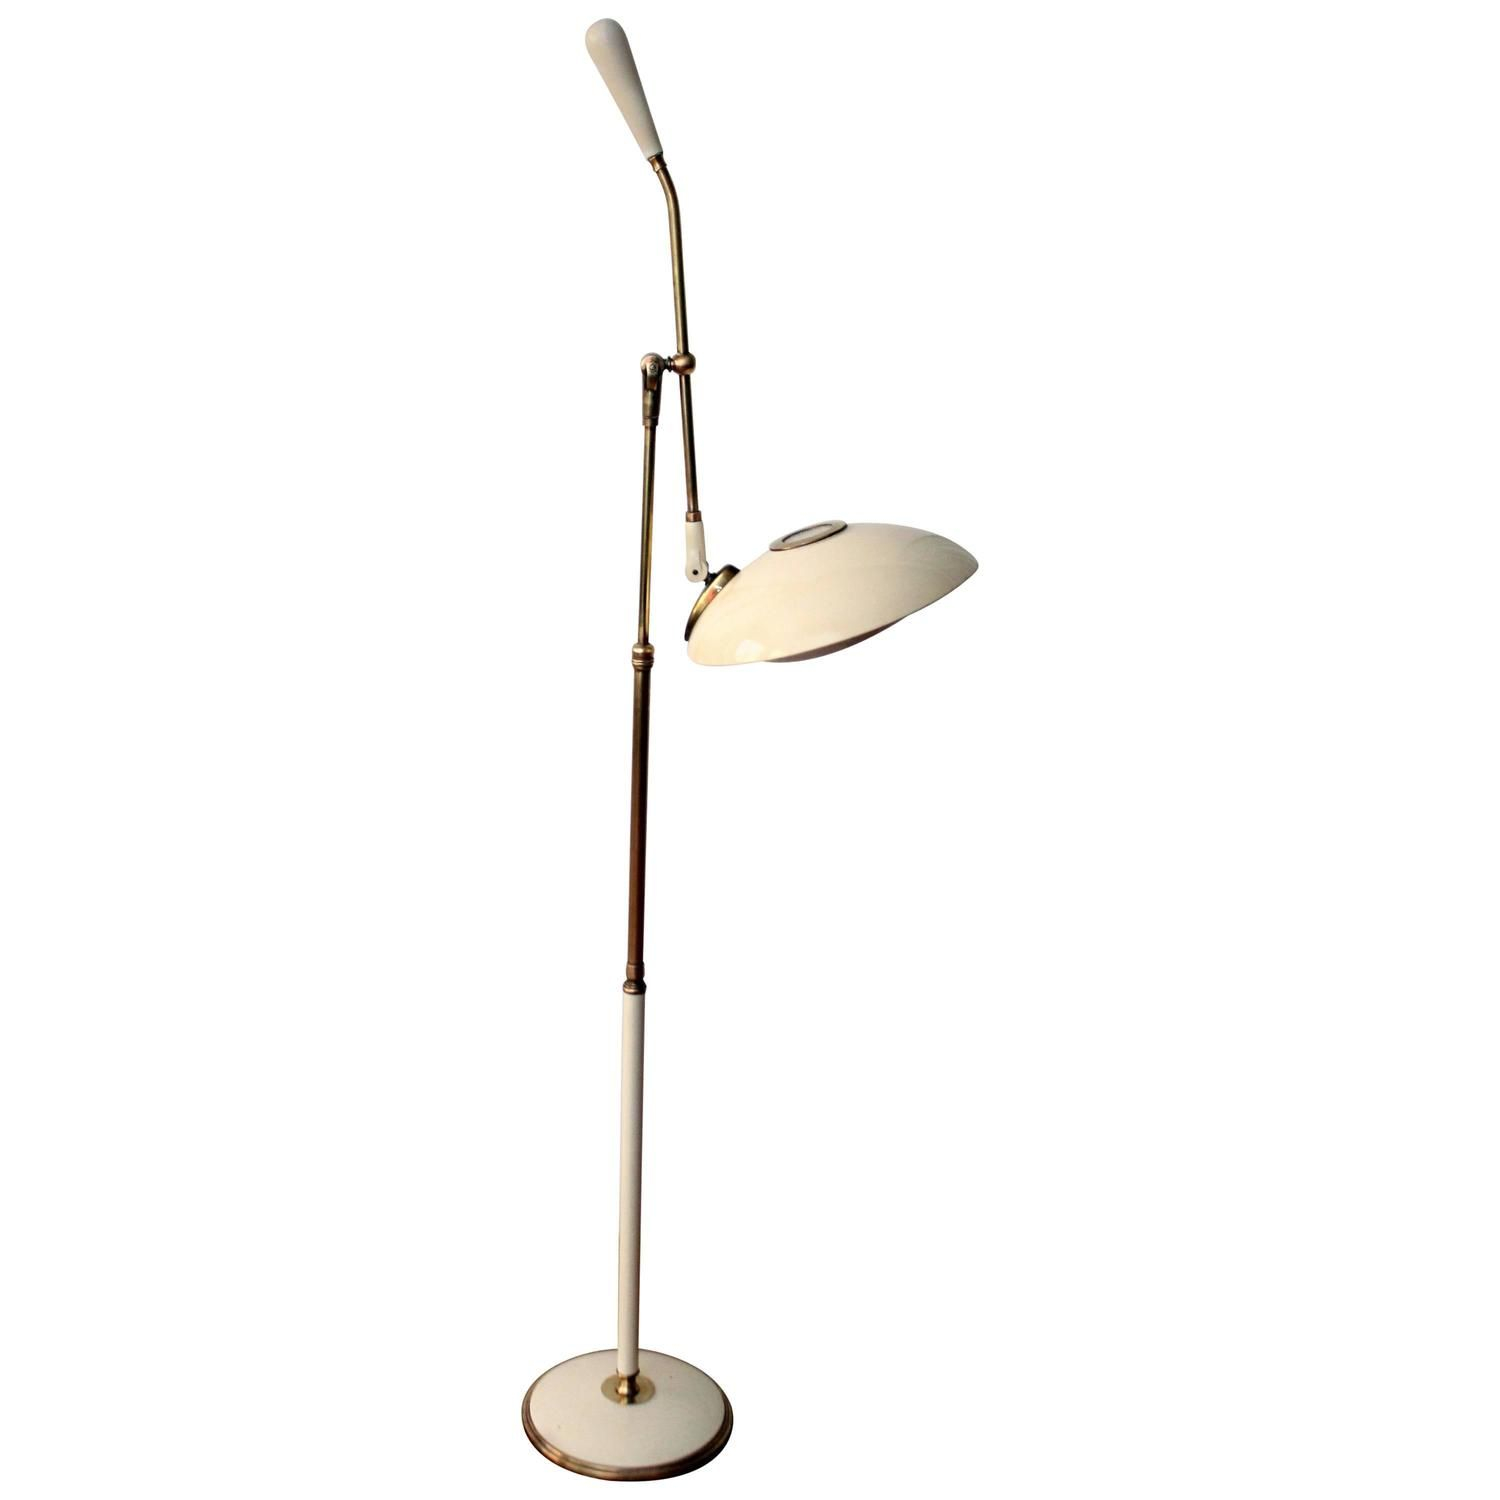 Gerald Thurston For Lightolier Floor Lamp Lamp Floor pertaining to sizing 1500 X 1500